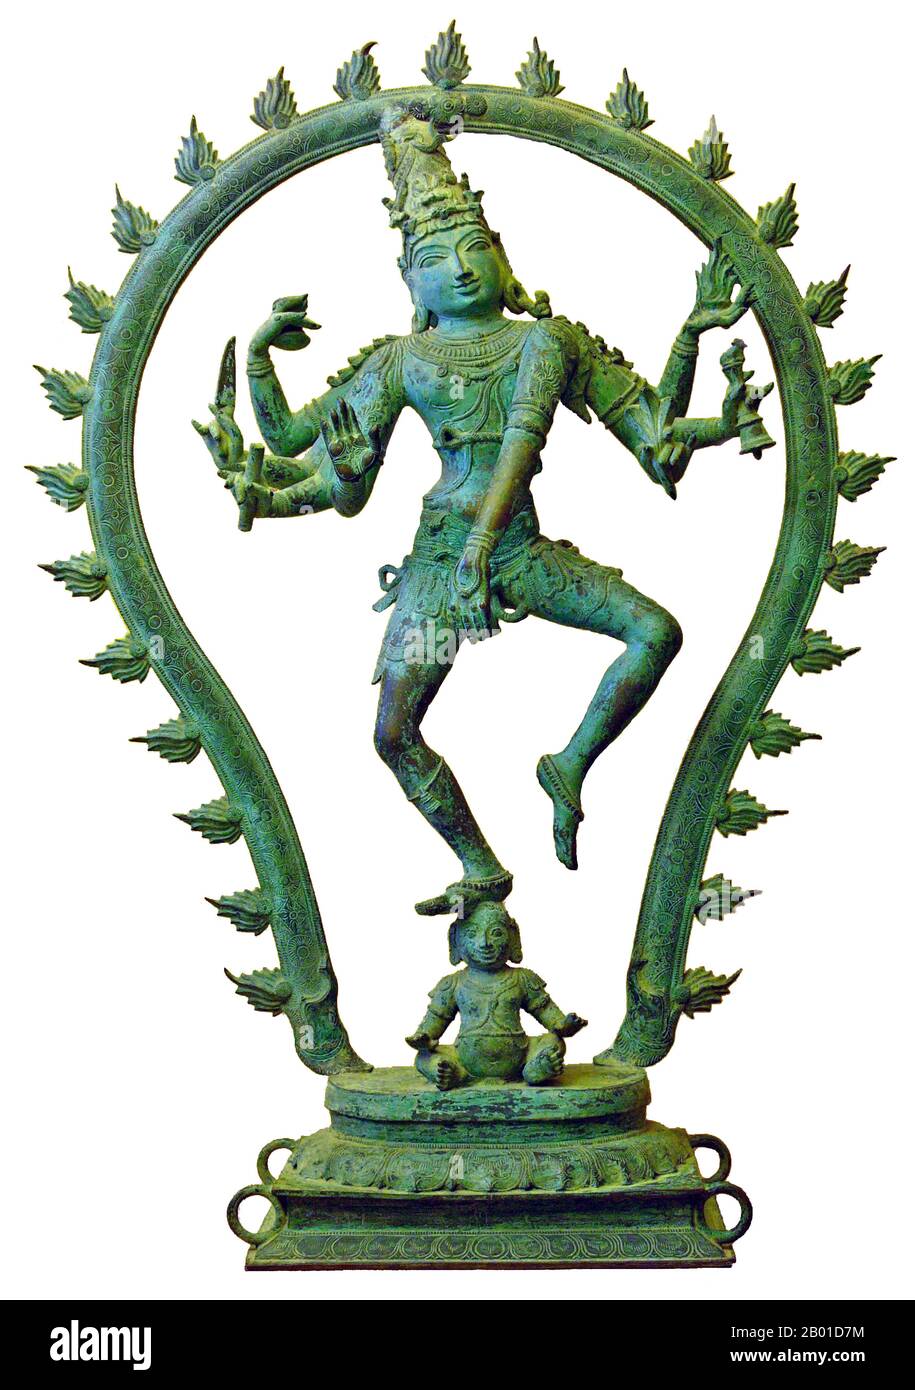 Bronze Image of Shiva as Nataraja, Lord of Dance - Michael Backman Ltd